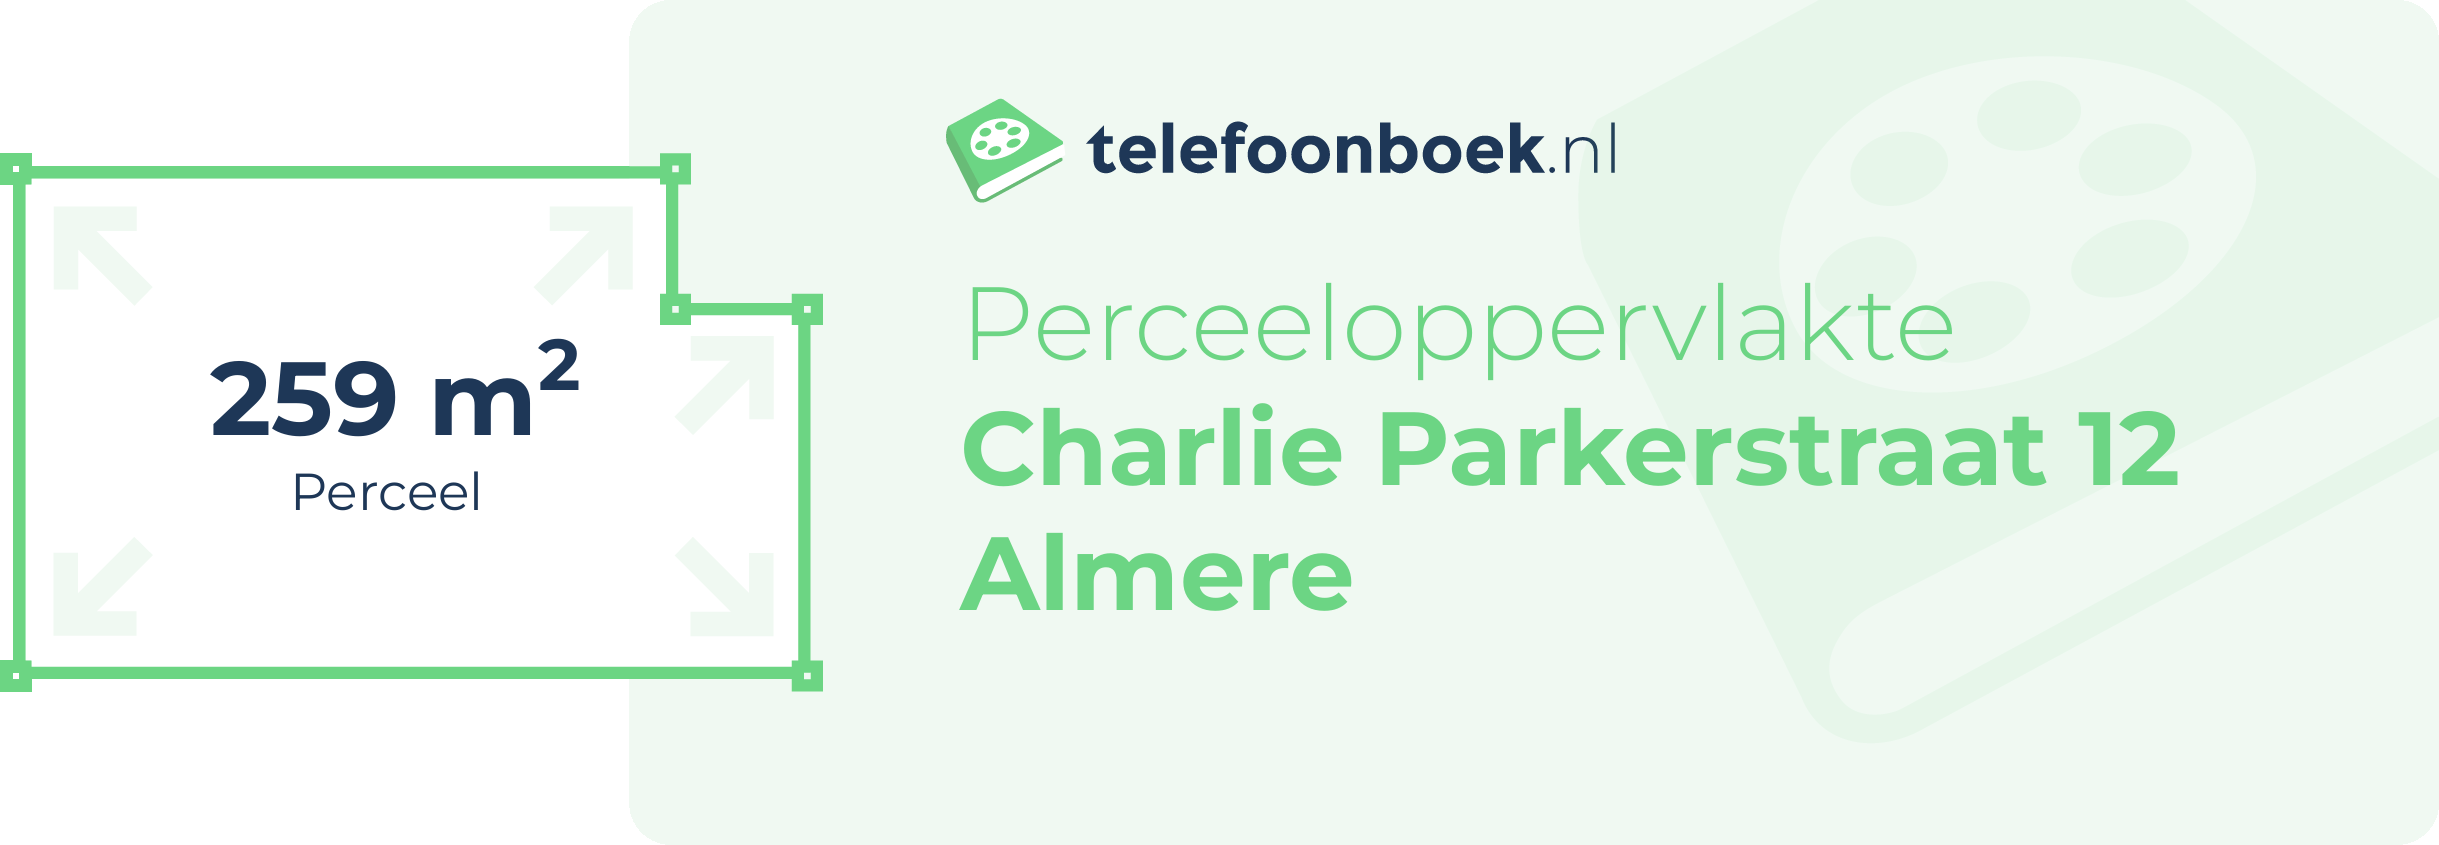 Perceeloppervlakte Charlie Parkerstraat 12 Almere